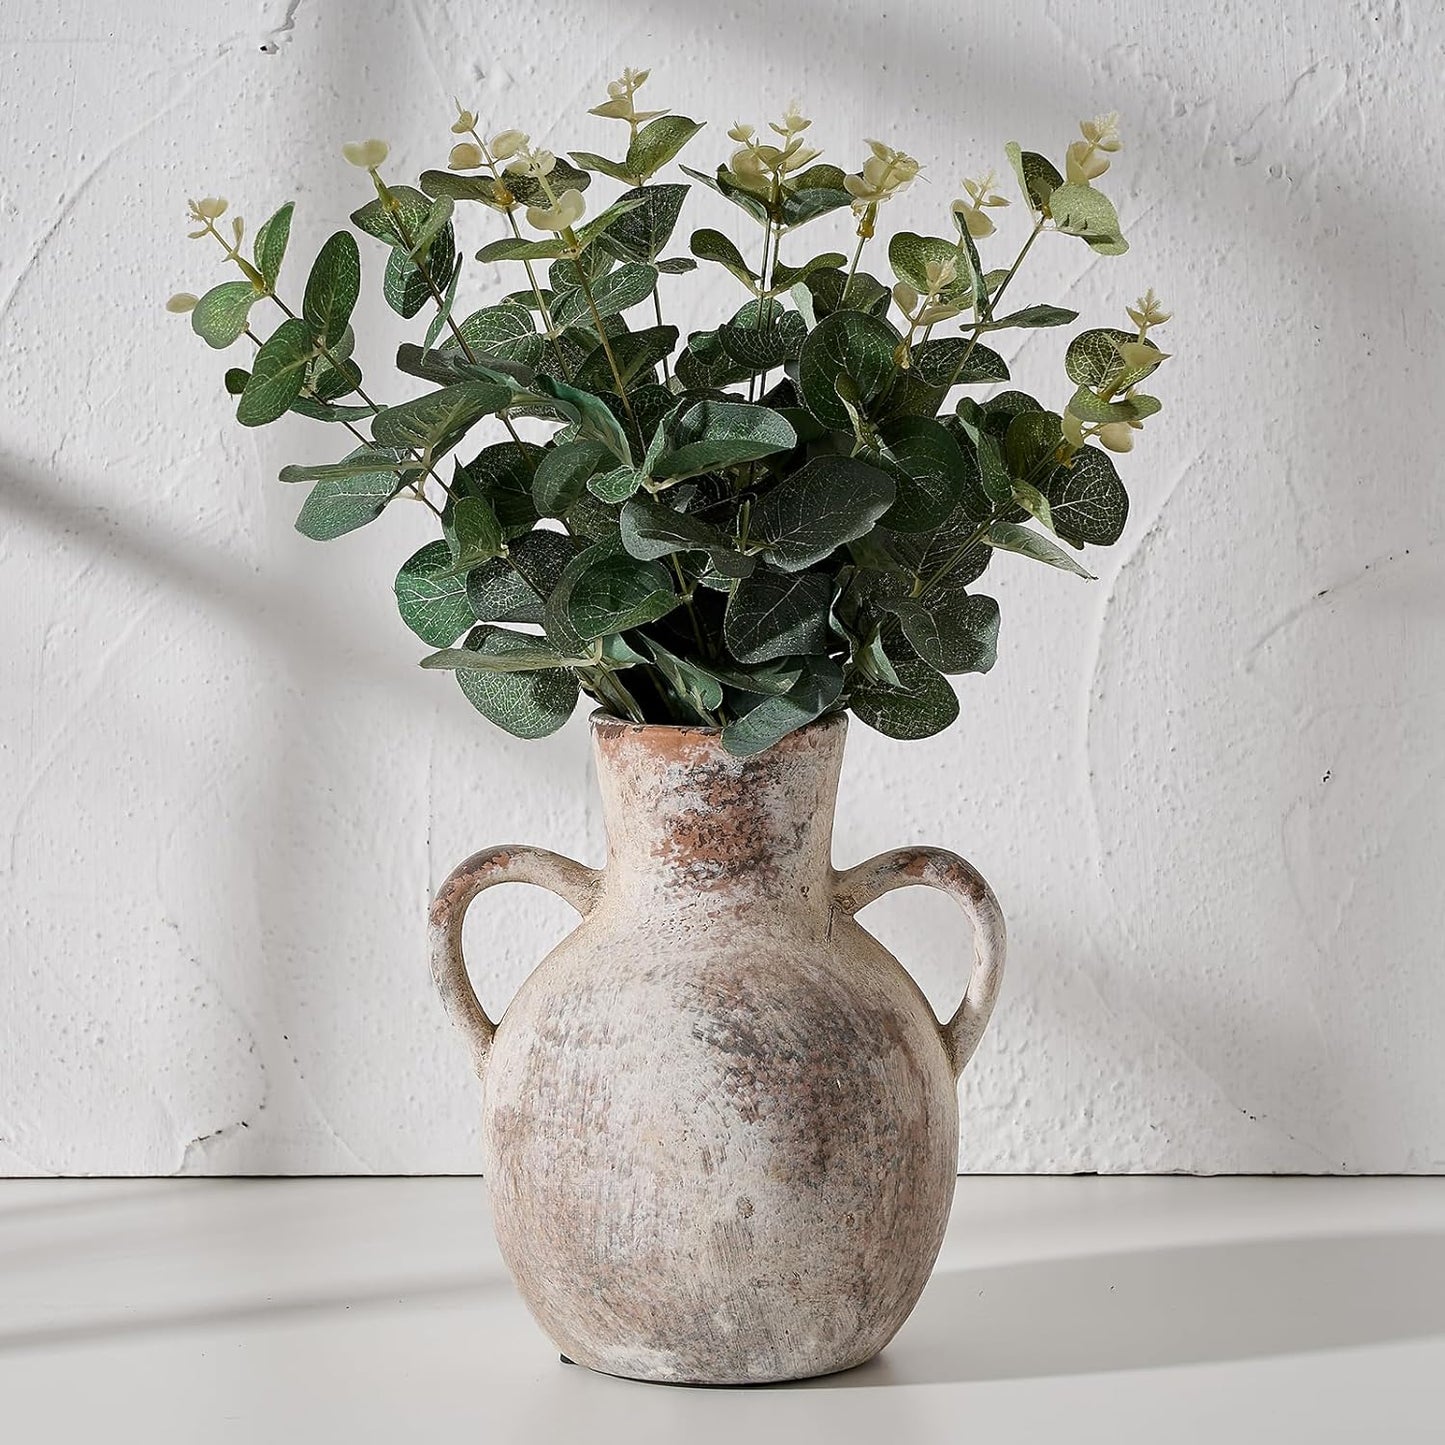 SIDUCAL Rustic Ceramic Farmhouse Flower Vase with 2 Handles, Whitewashed Terra Cotta Vase, Decorative Pottery Flower Vase for Home Decor, Table, Living Room, Shelf Decor, 7.3 Inch, Terra